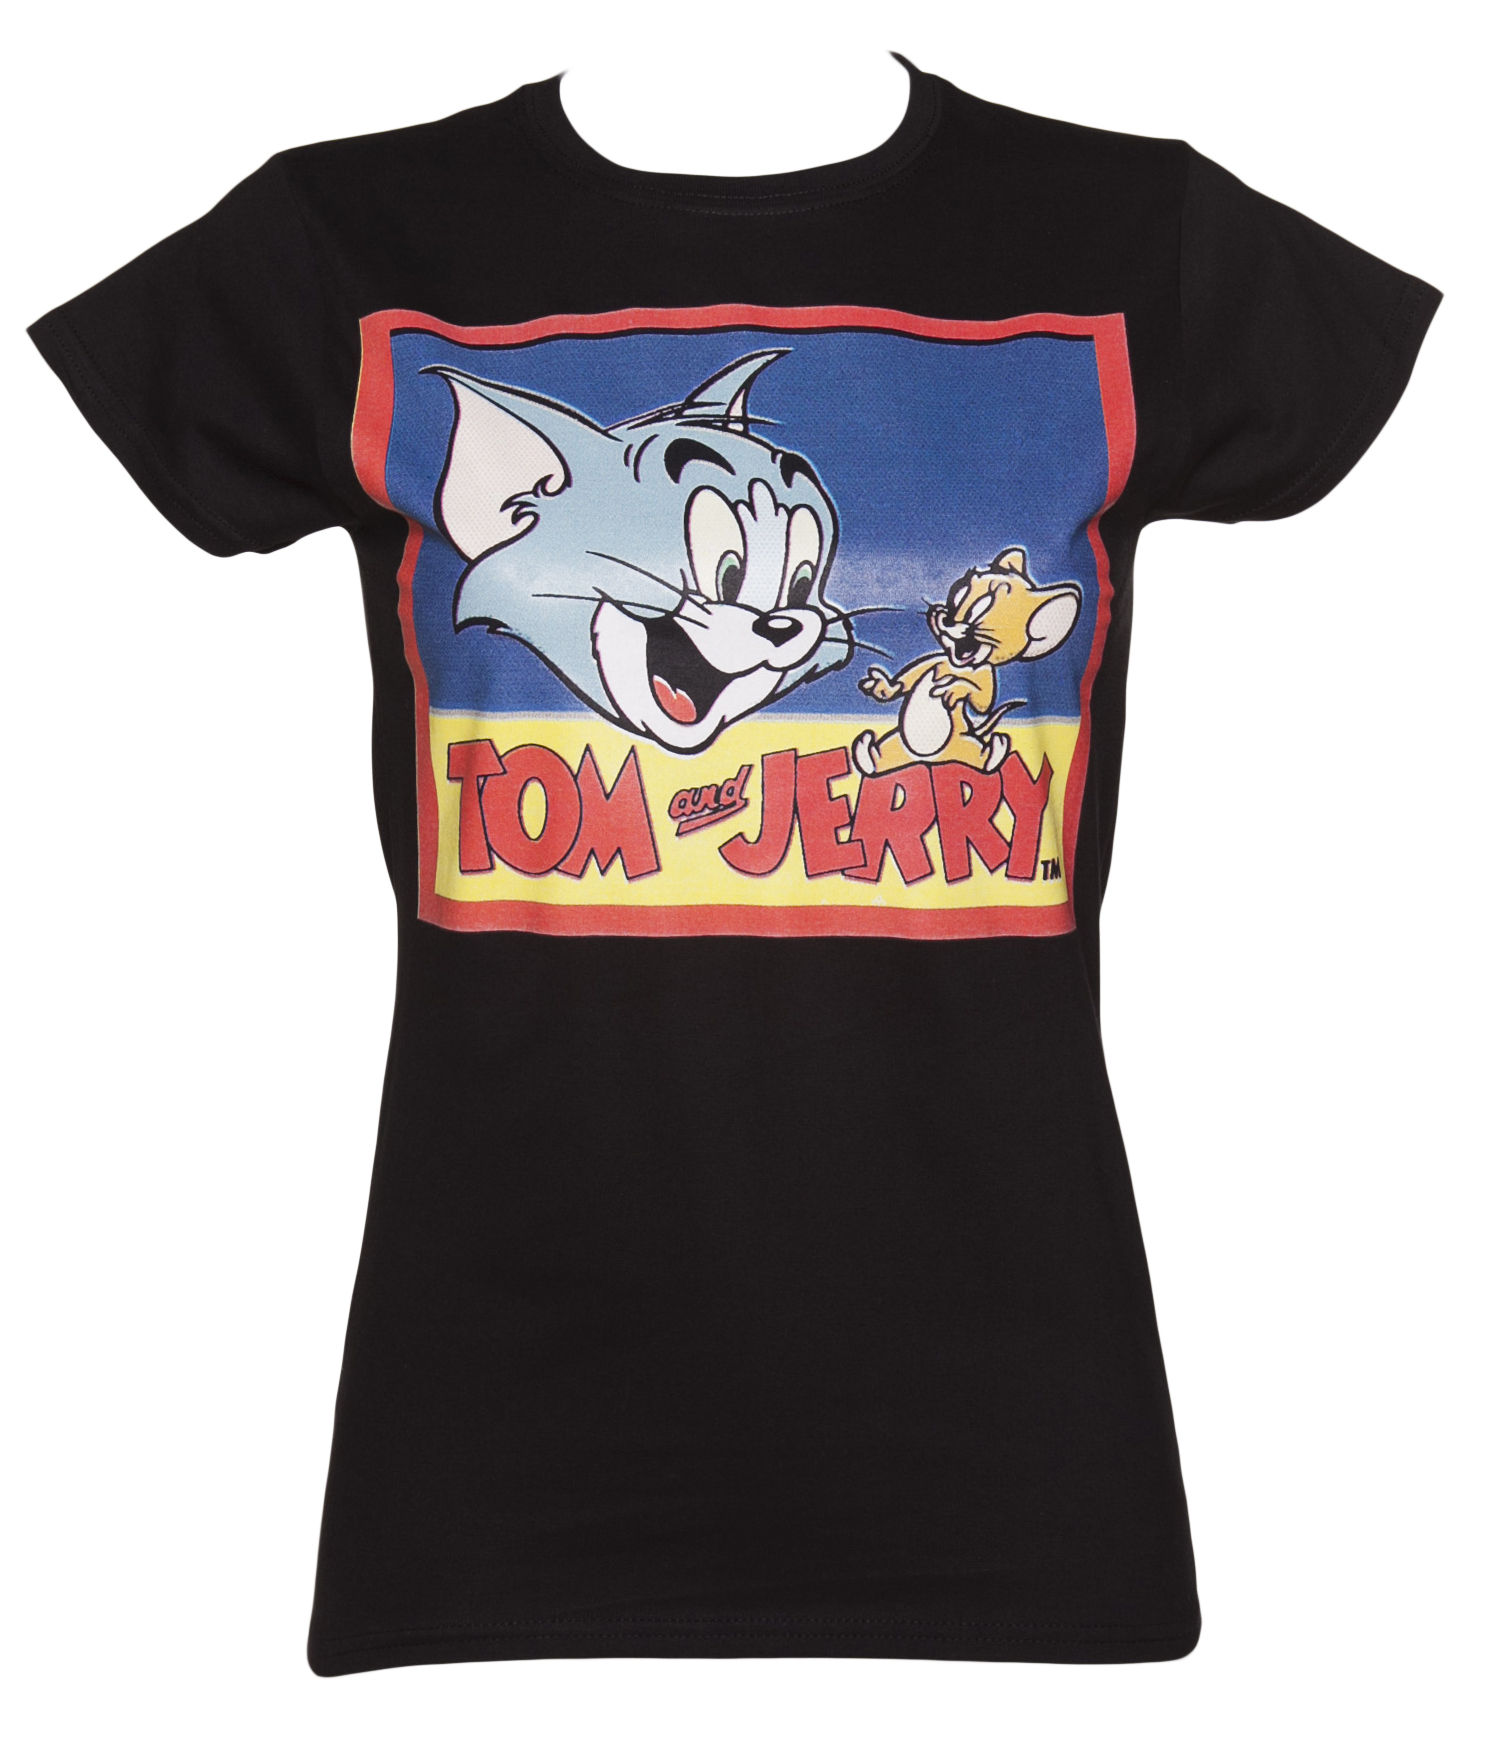 Black Vintage Print Tom And Jerry T-Shirt